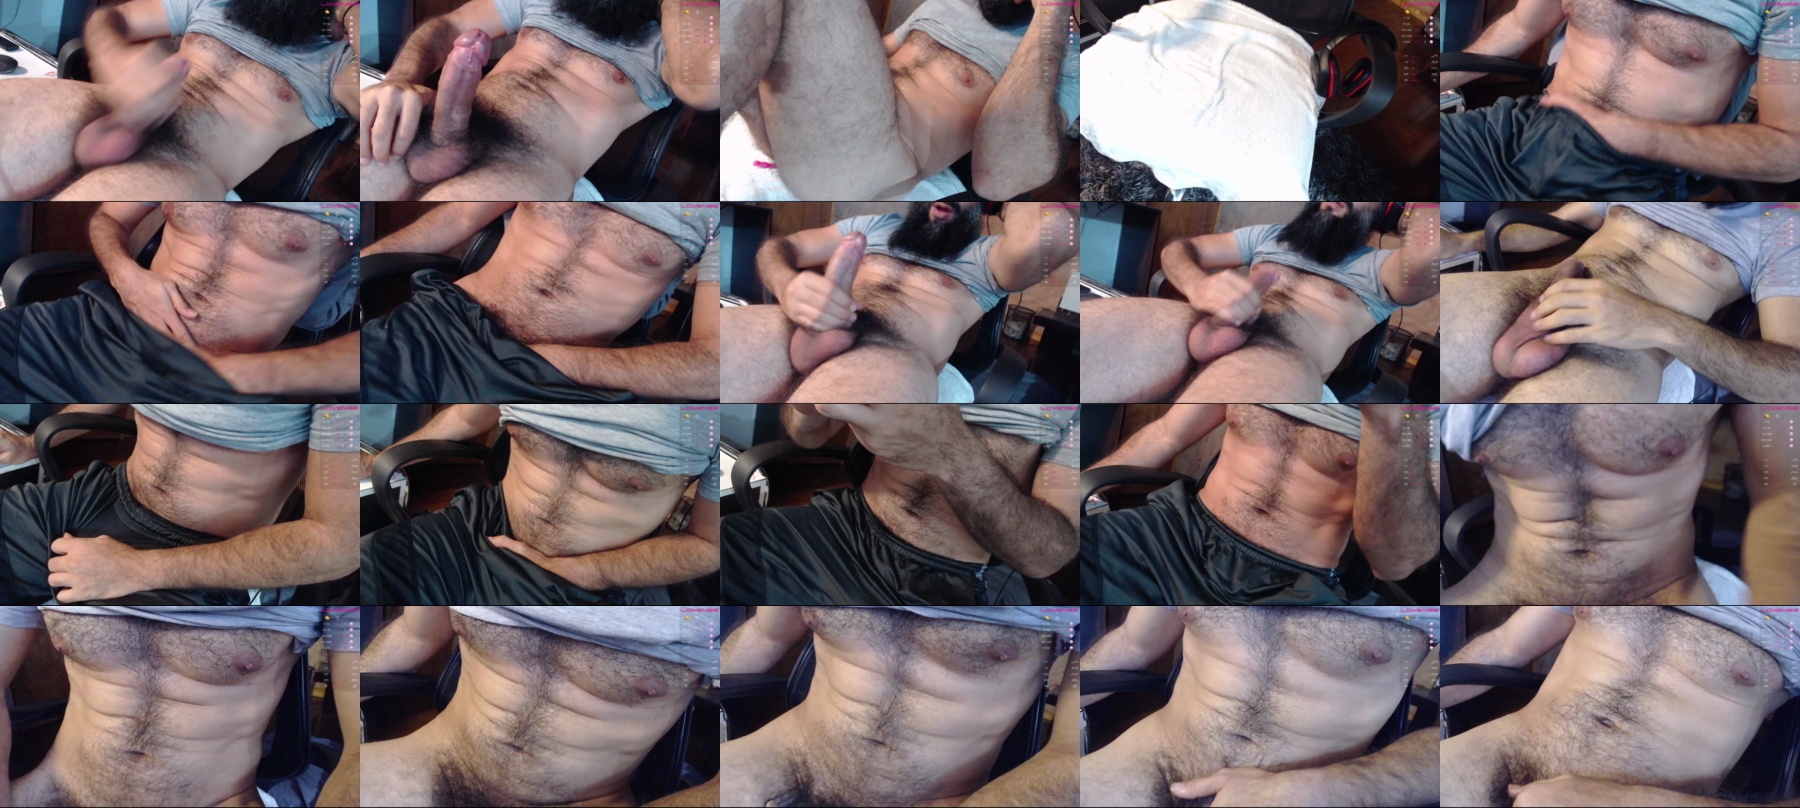 Antonywebcam  13-11-2021 Male Topless